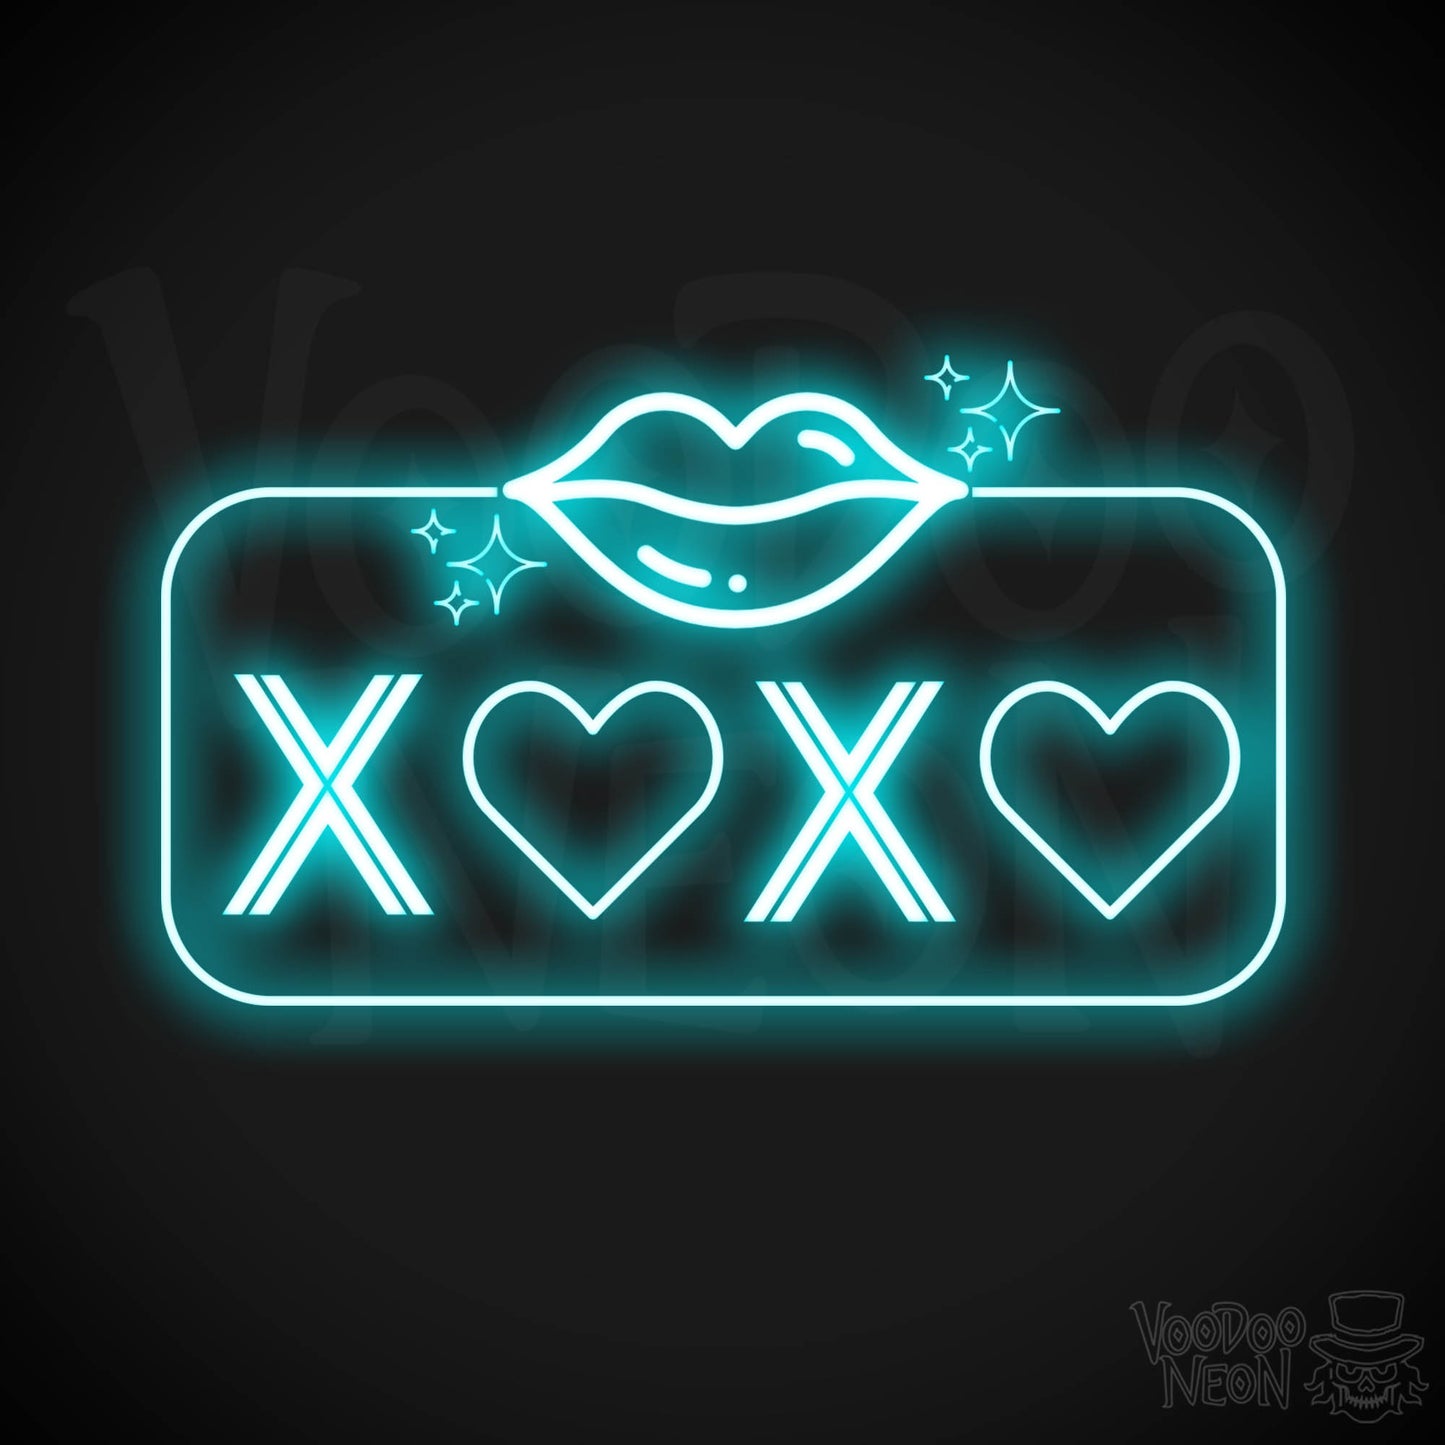 Xoxo Neon Sign - Neon XOXO - Kiss Hug Neon Wall Art - Color Ice Blue